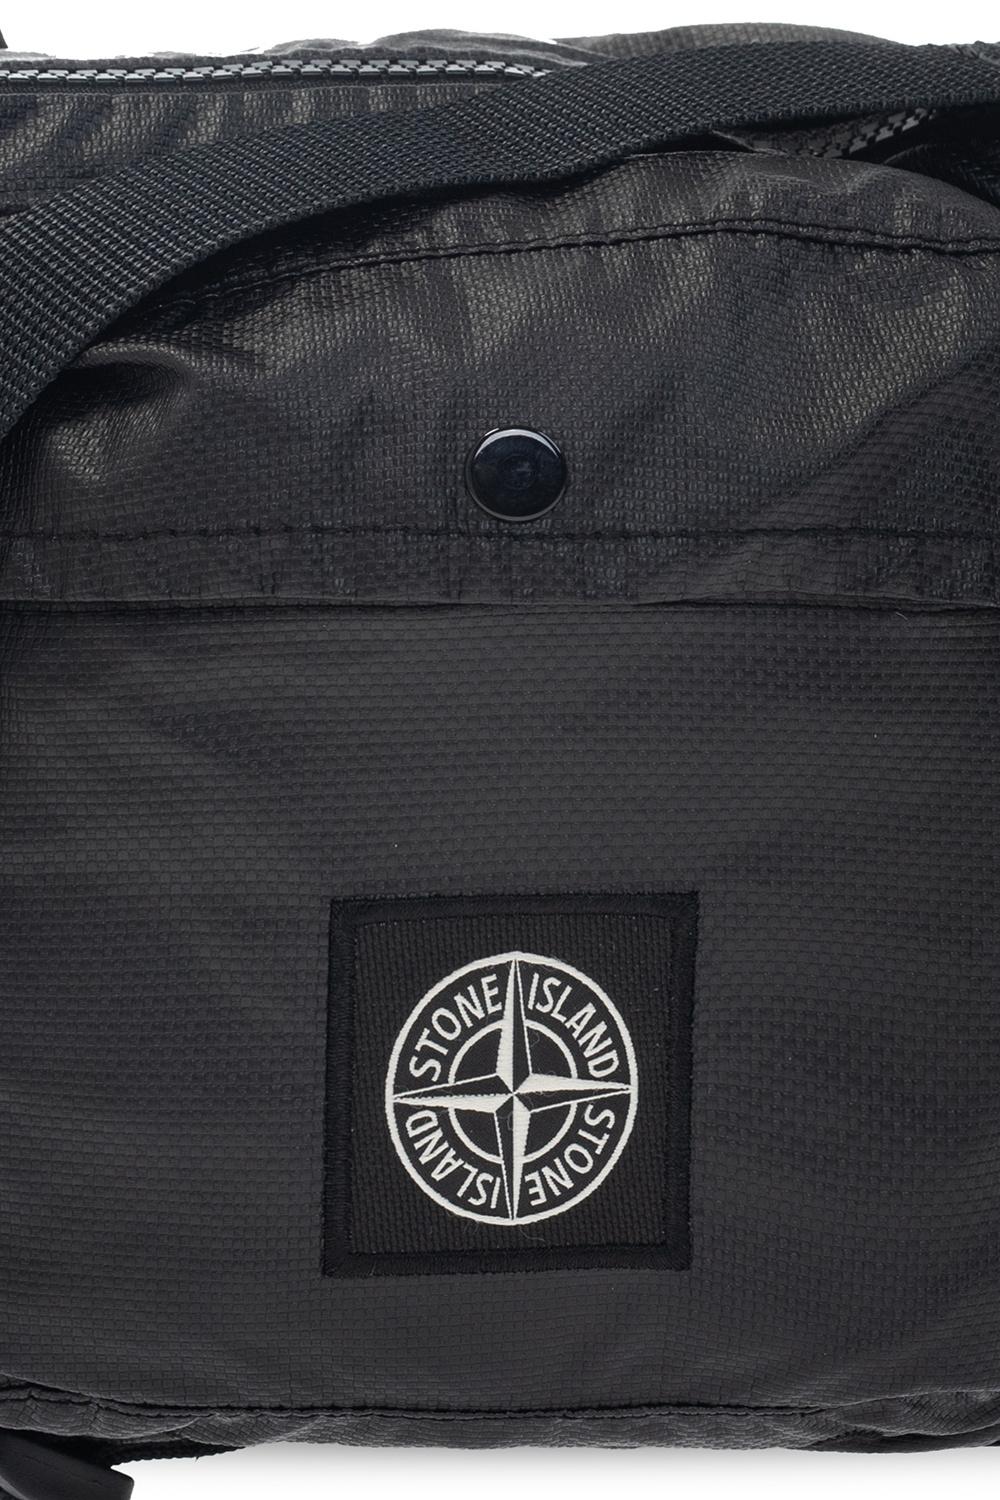 Stone Island Shoulder Bag With Logo in Black for Men | Lyst